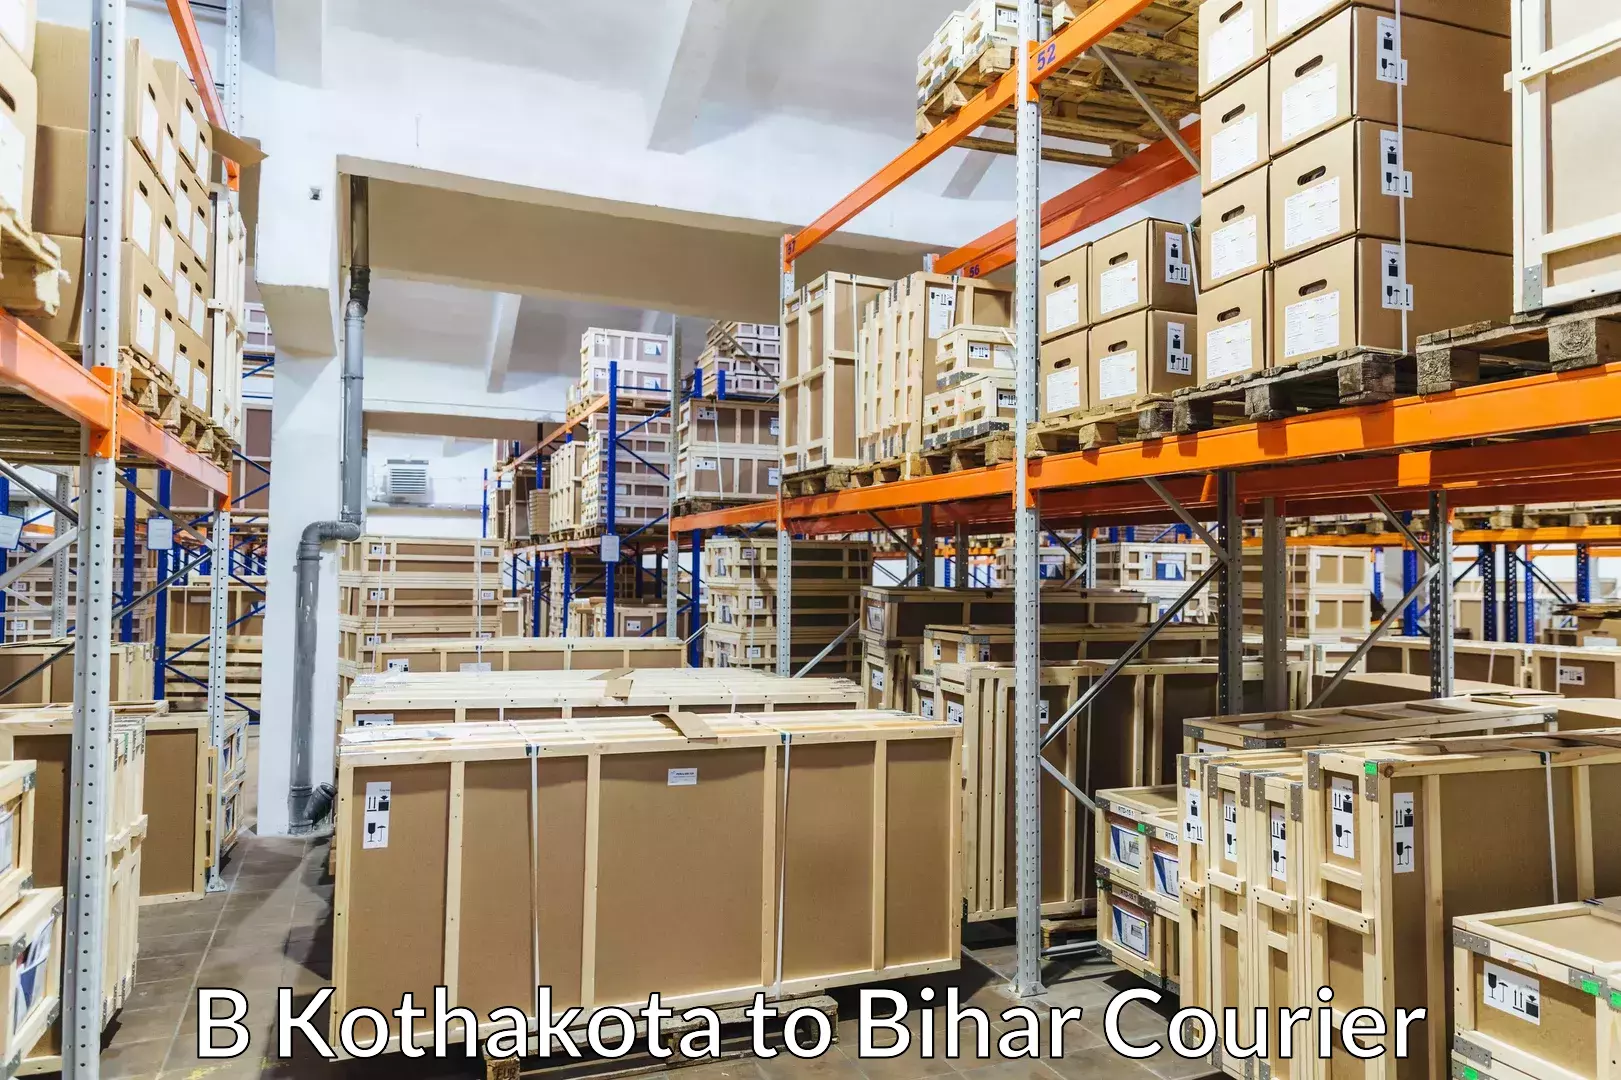 Moving and packing experts B Kothakota to Sheonar